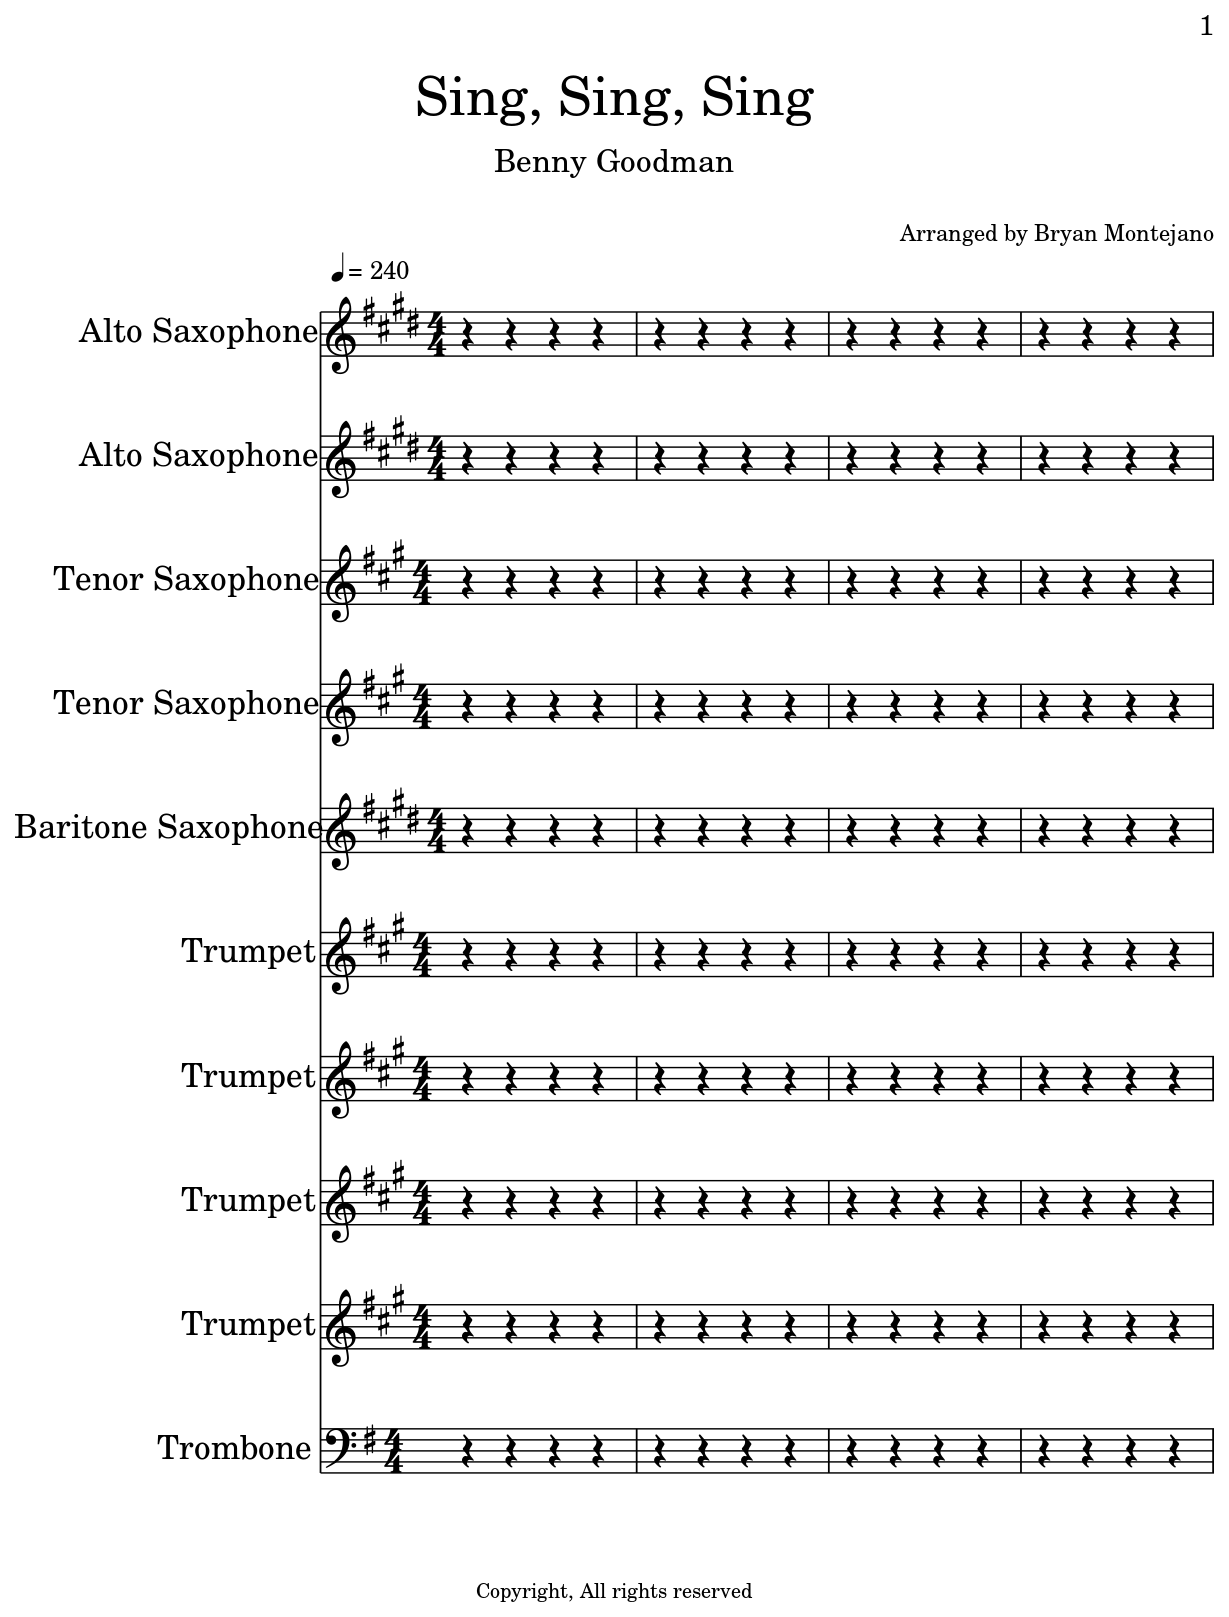 Sing Sing Sing Sheet Music For Alto Saxophone Tenor Saxophone Baritone Saxophone Trumpet Trombone Acoustic Guitar Piano Electric Bass Drum Set